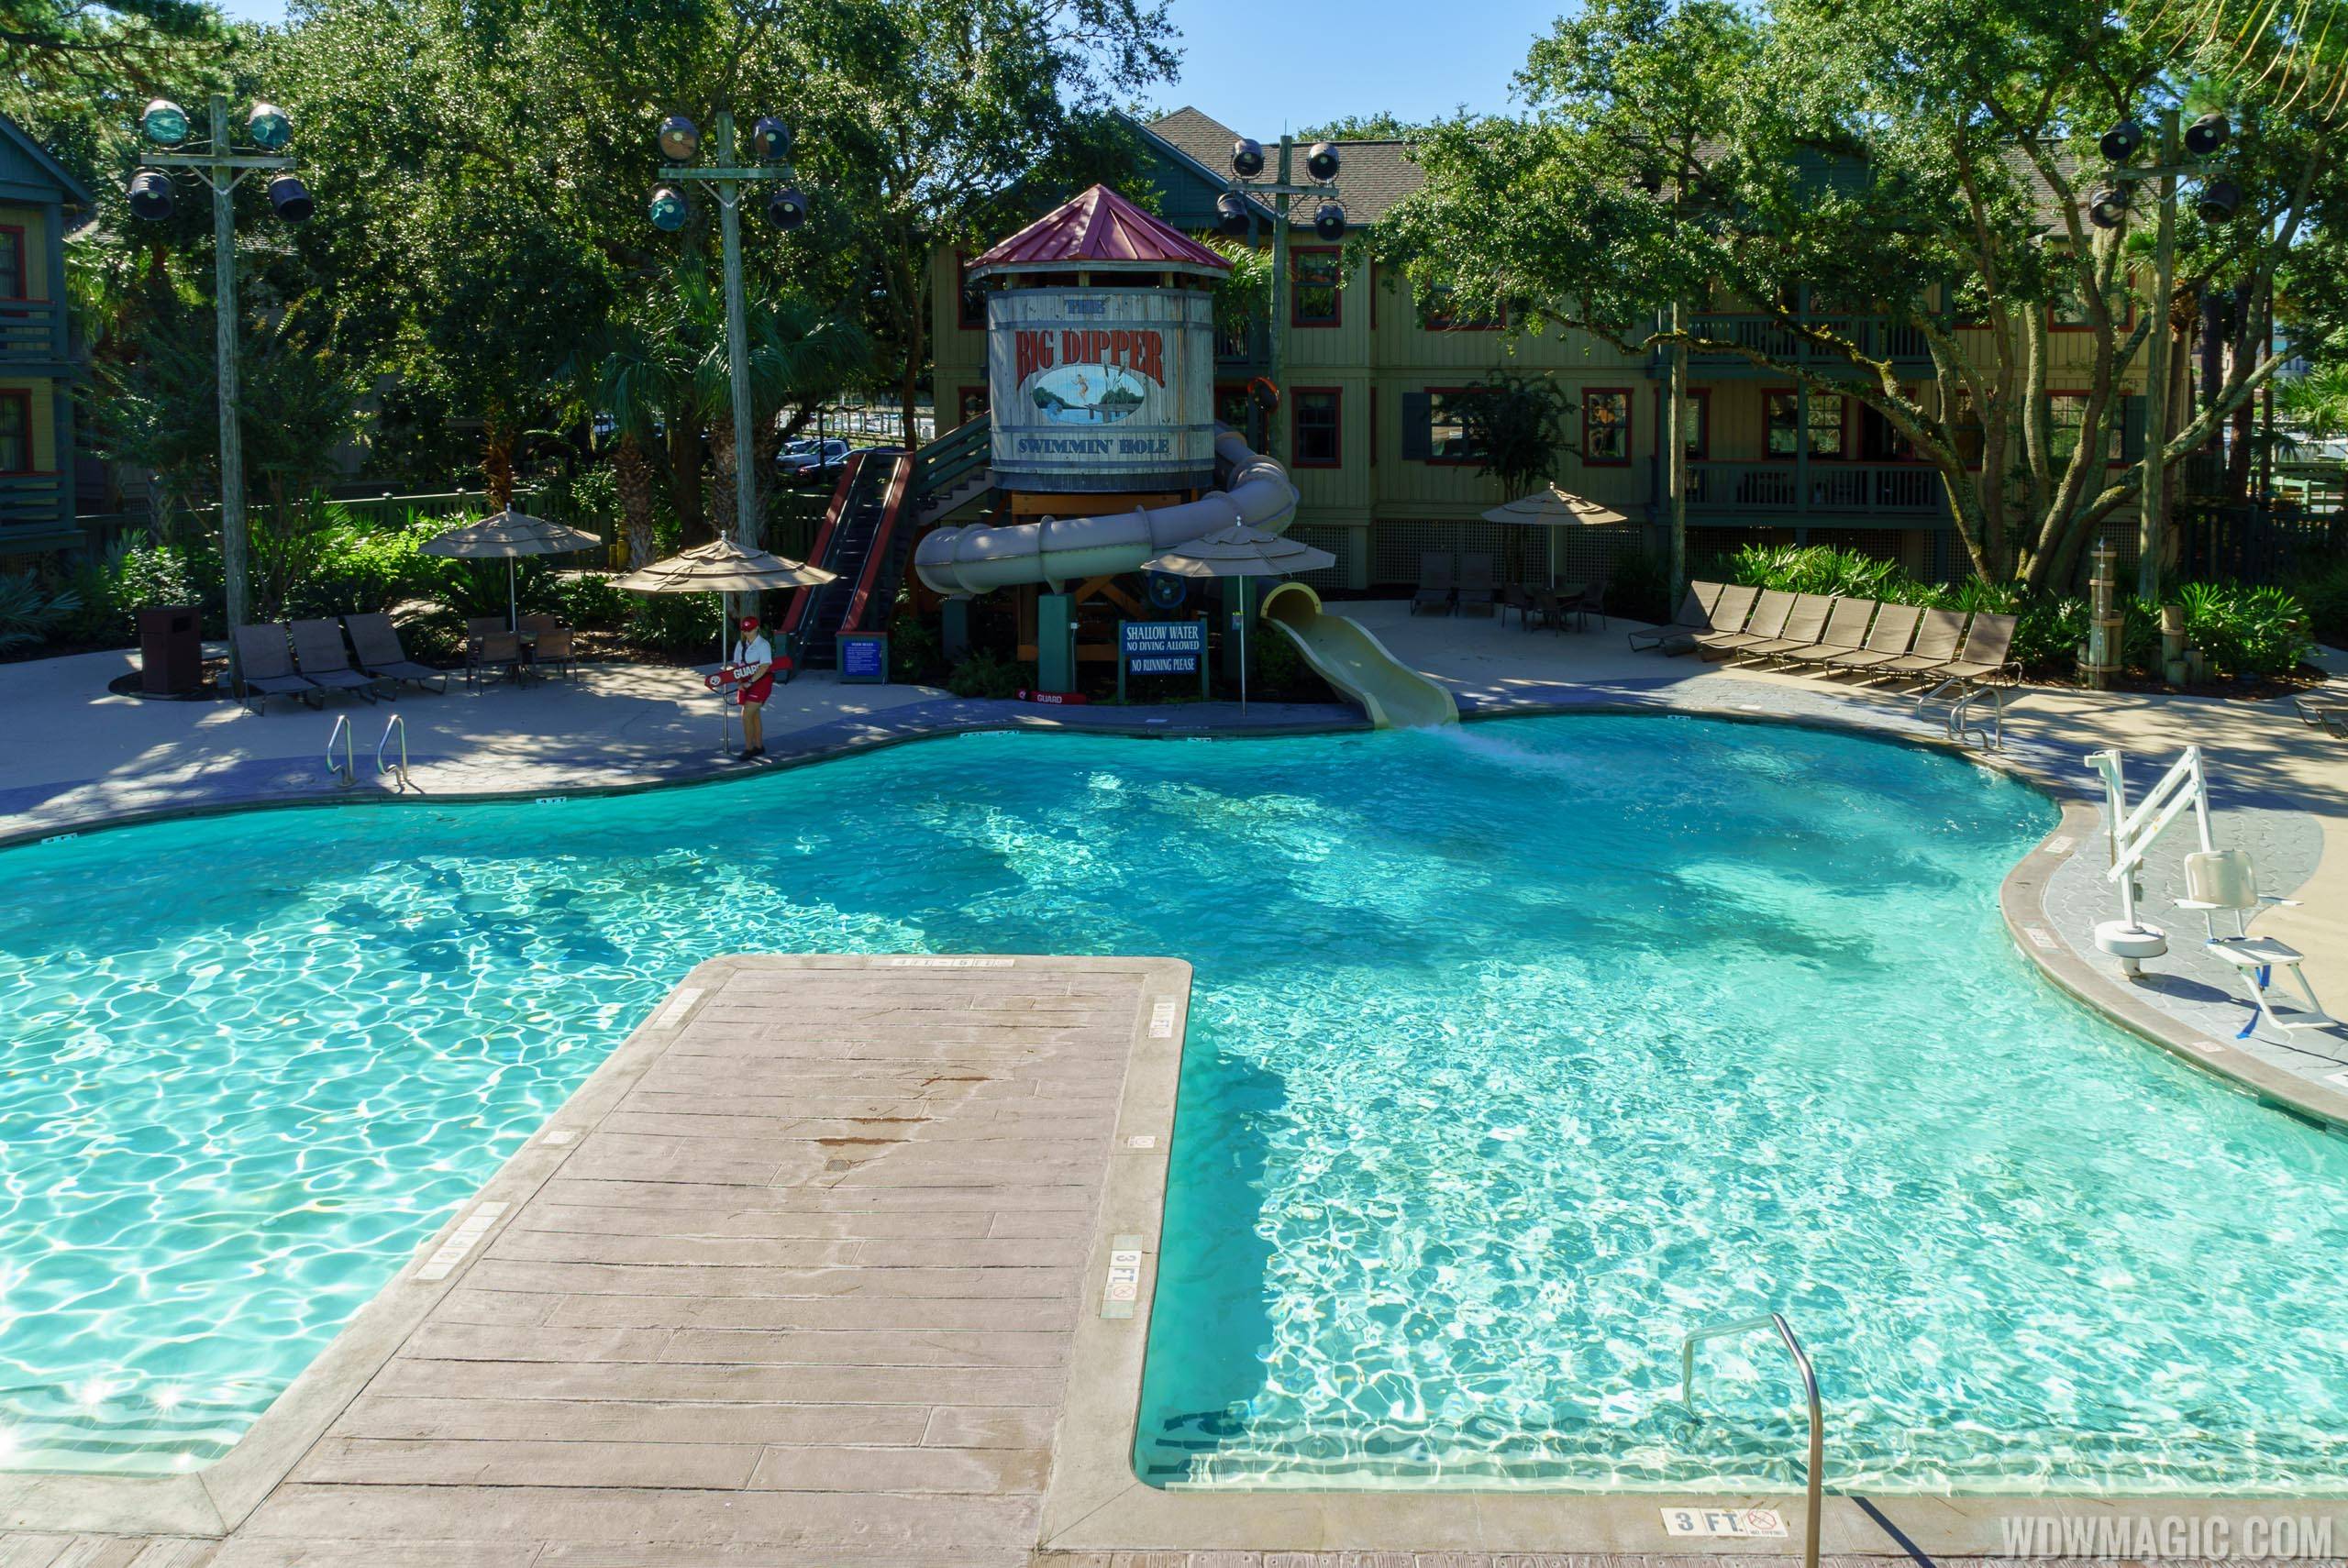 Disney's Hilton Head Island Resort - The Big Dipper pool